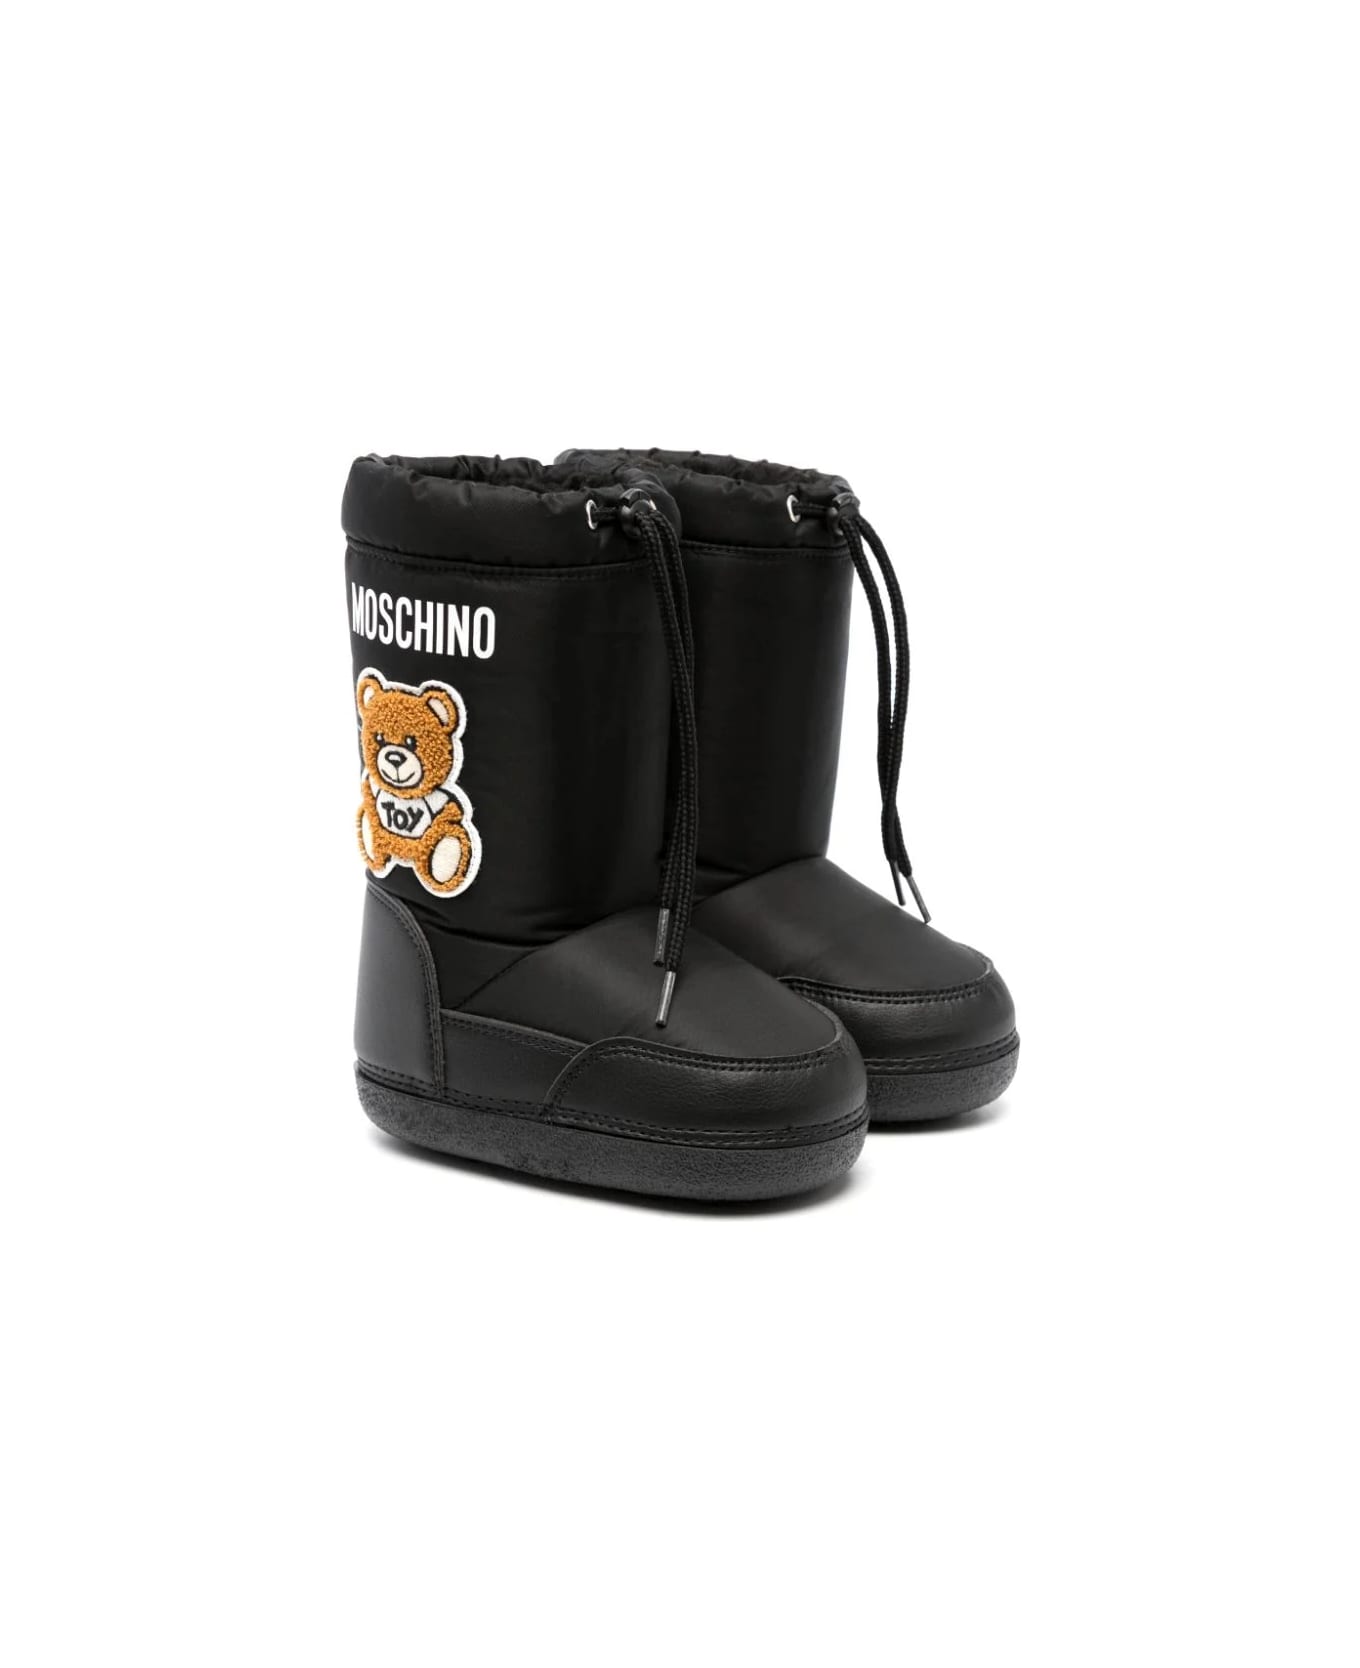 Moschino Teddy Bear Patch Snow Boots - Black シューズ